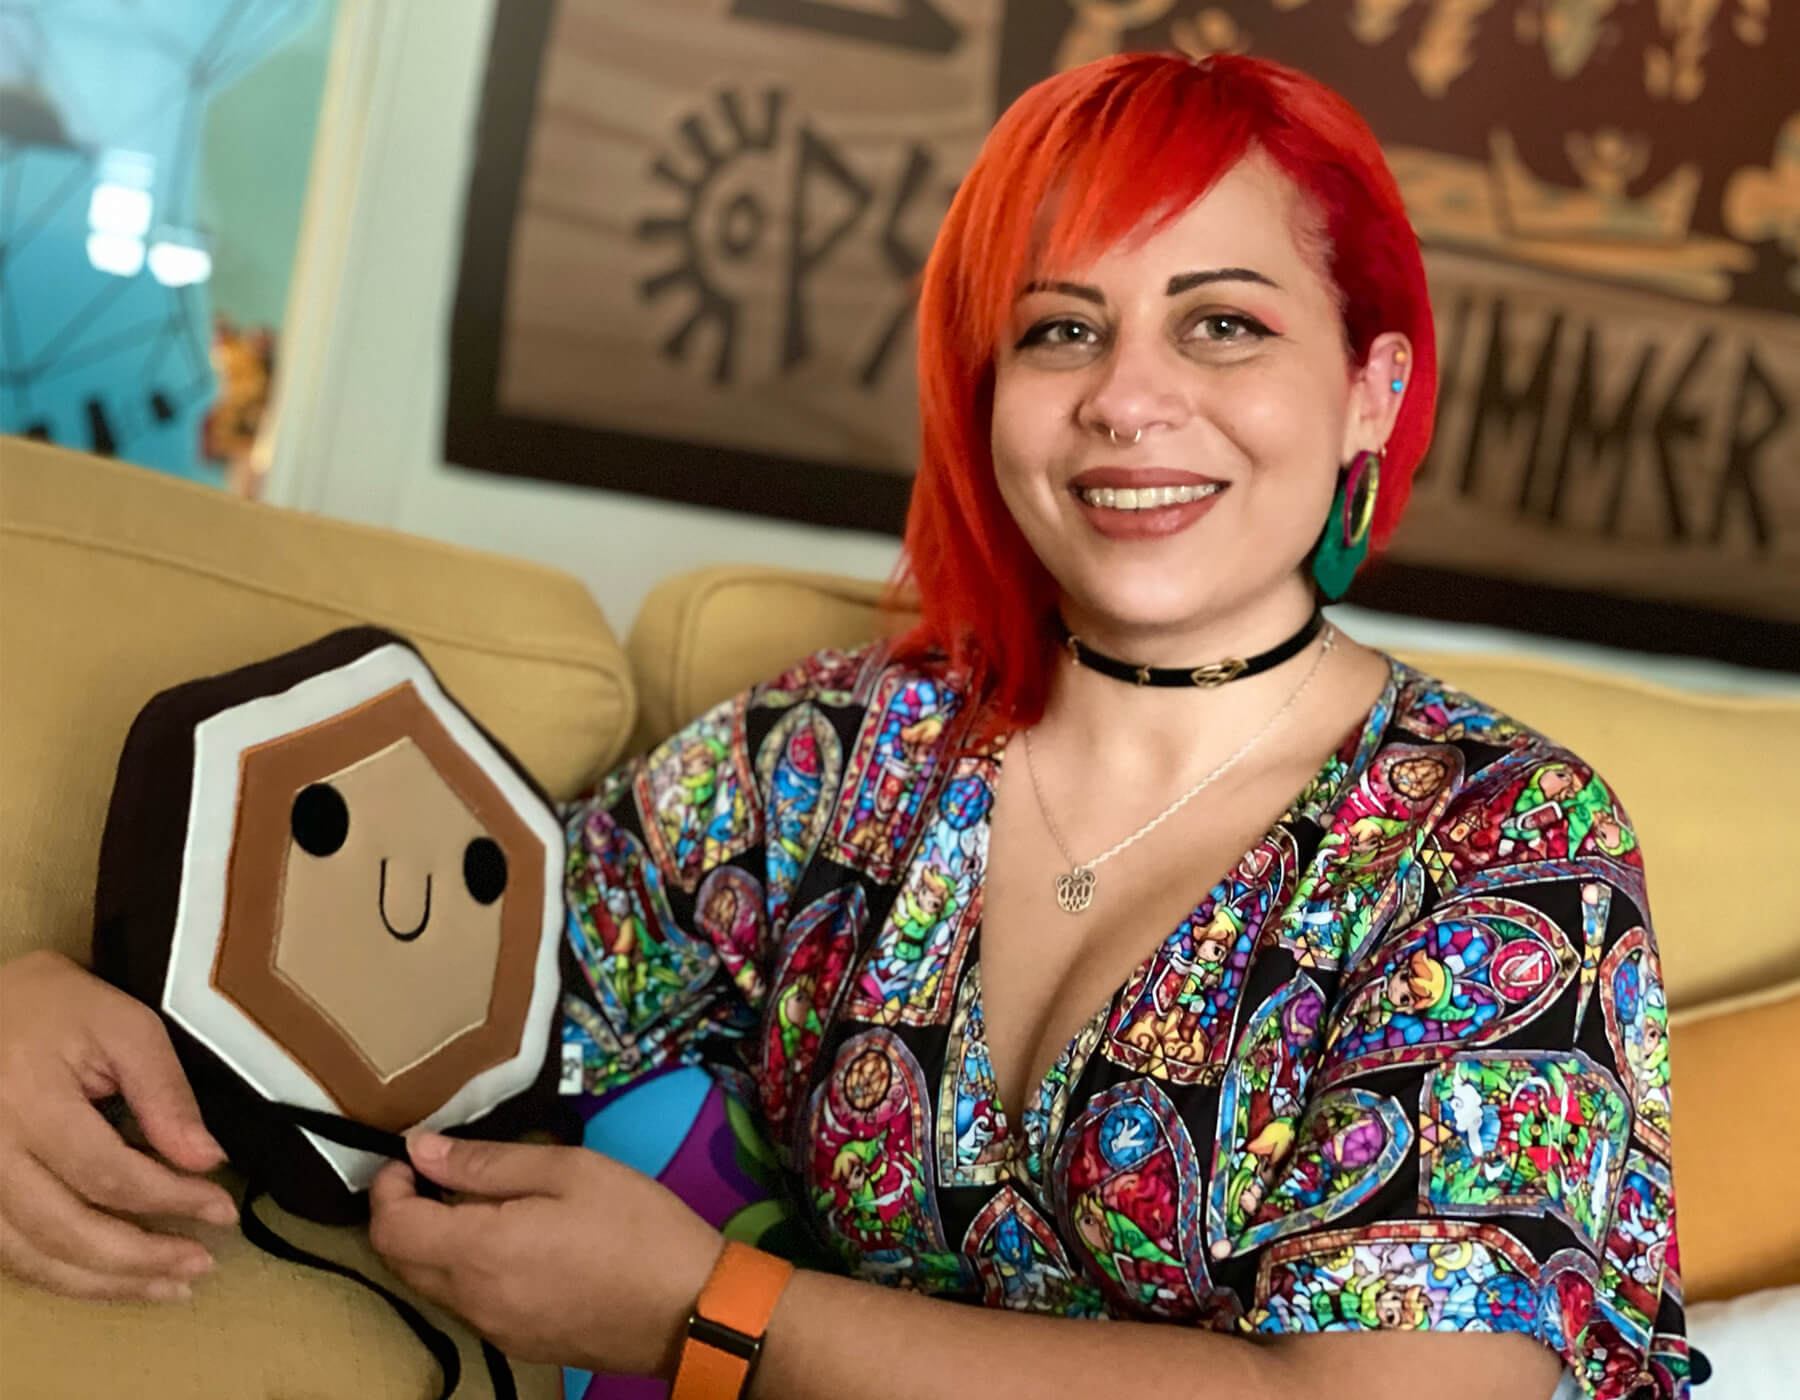 DigiPen alumni Zahra Amirabadi poses in the Double Fine studio with a stuffed animal.